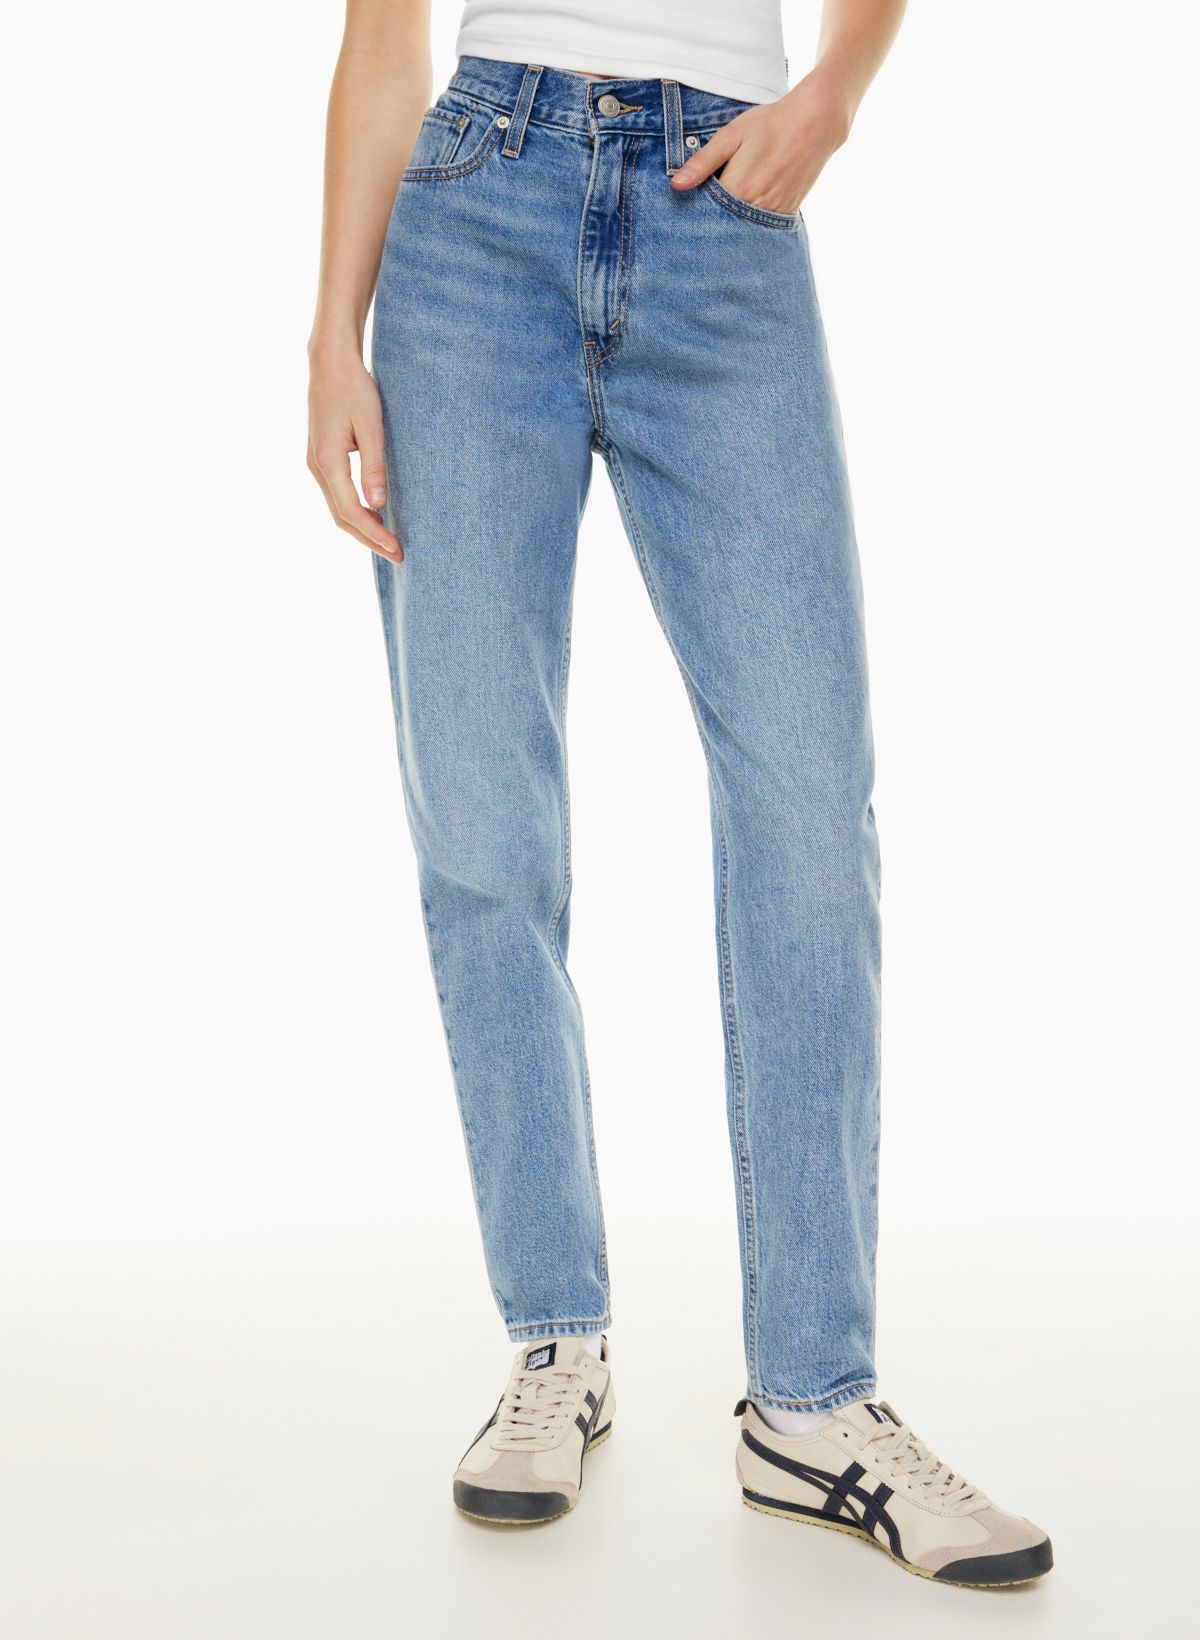 Plus Size 80s Jeans -  Canada